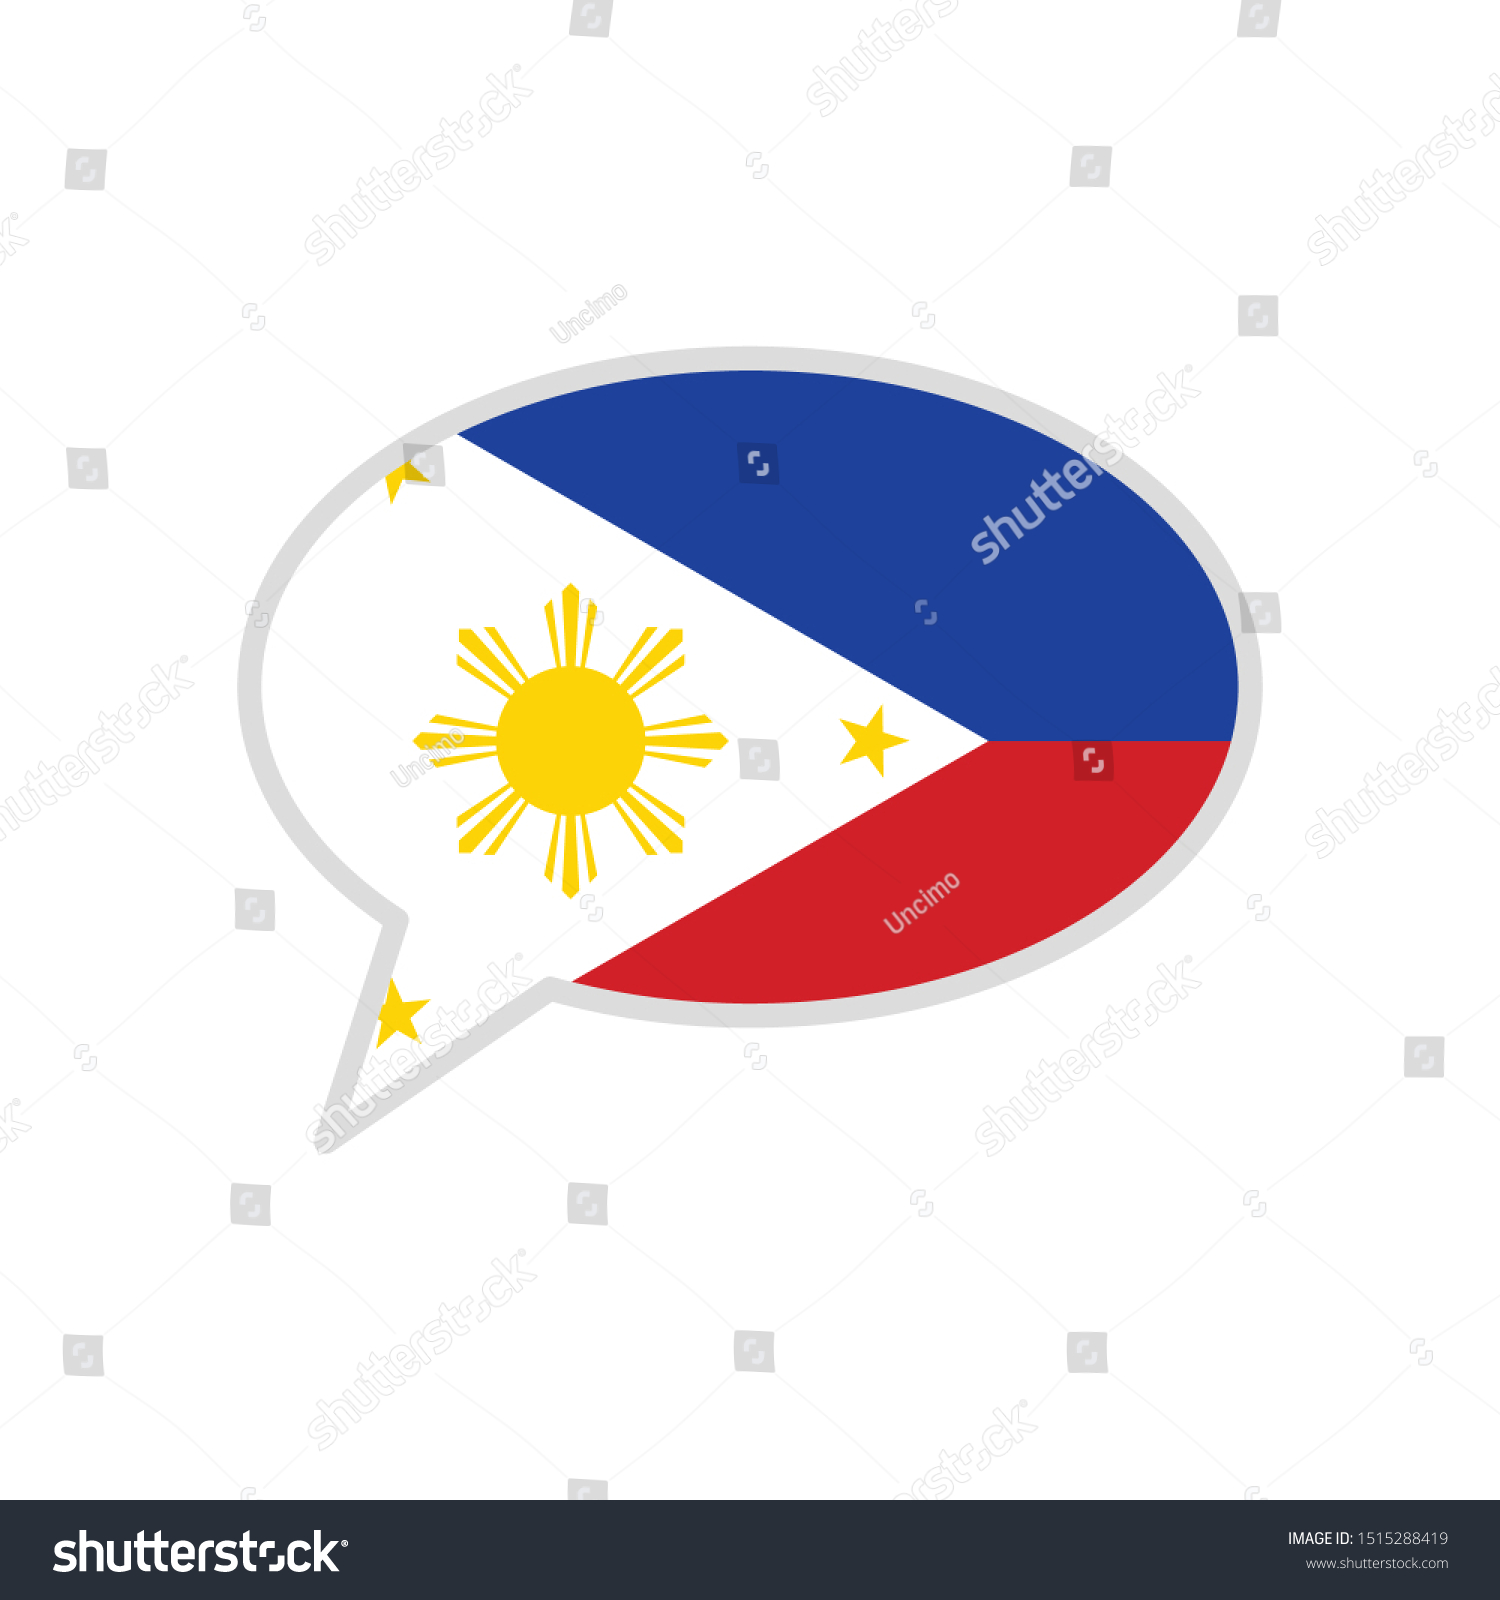 Philippines chat app